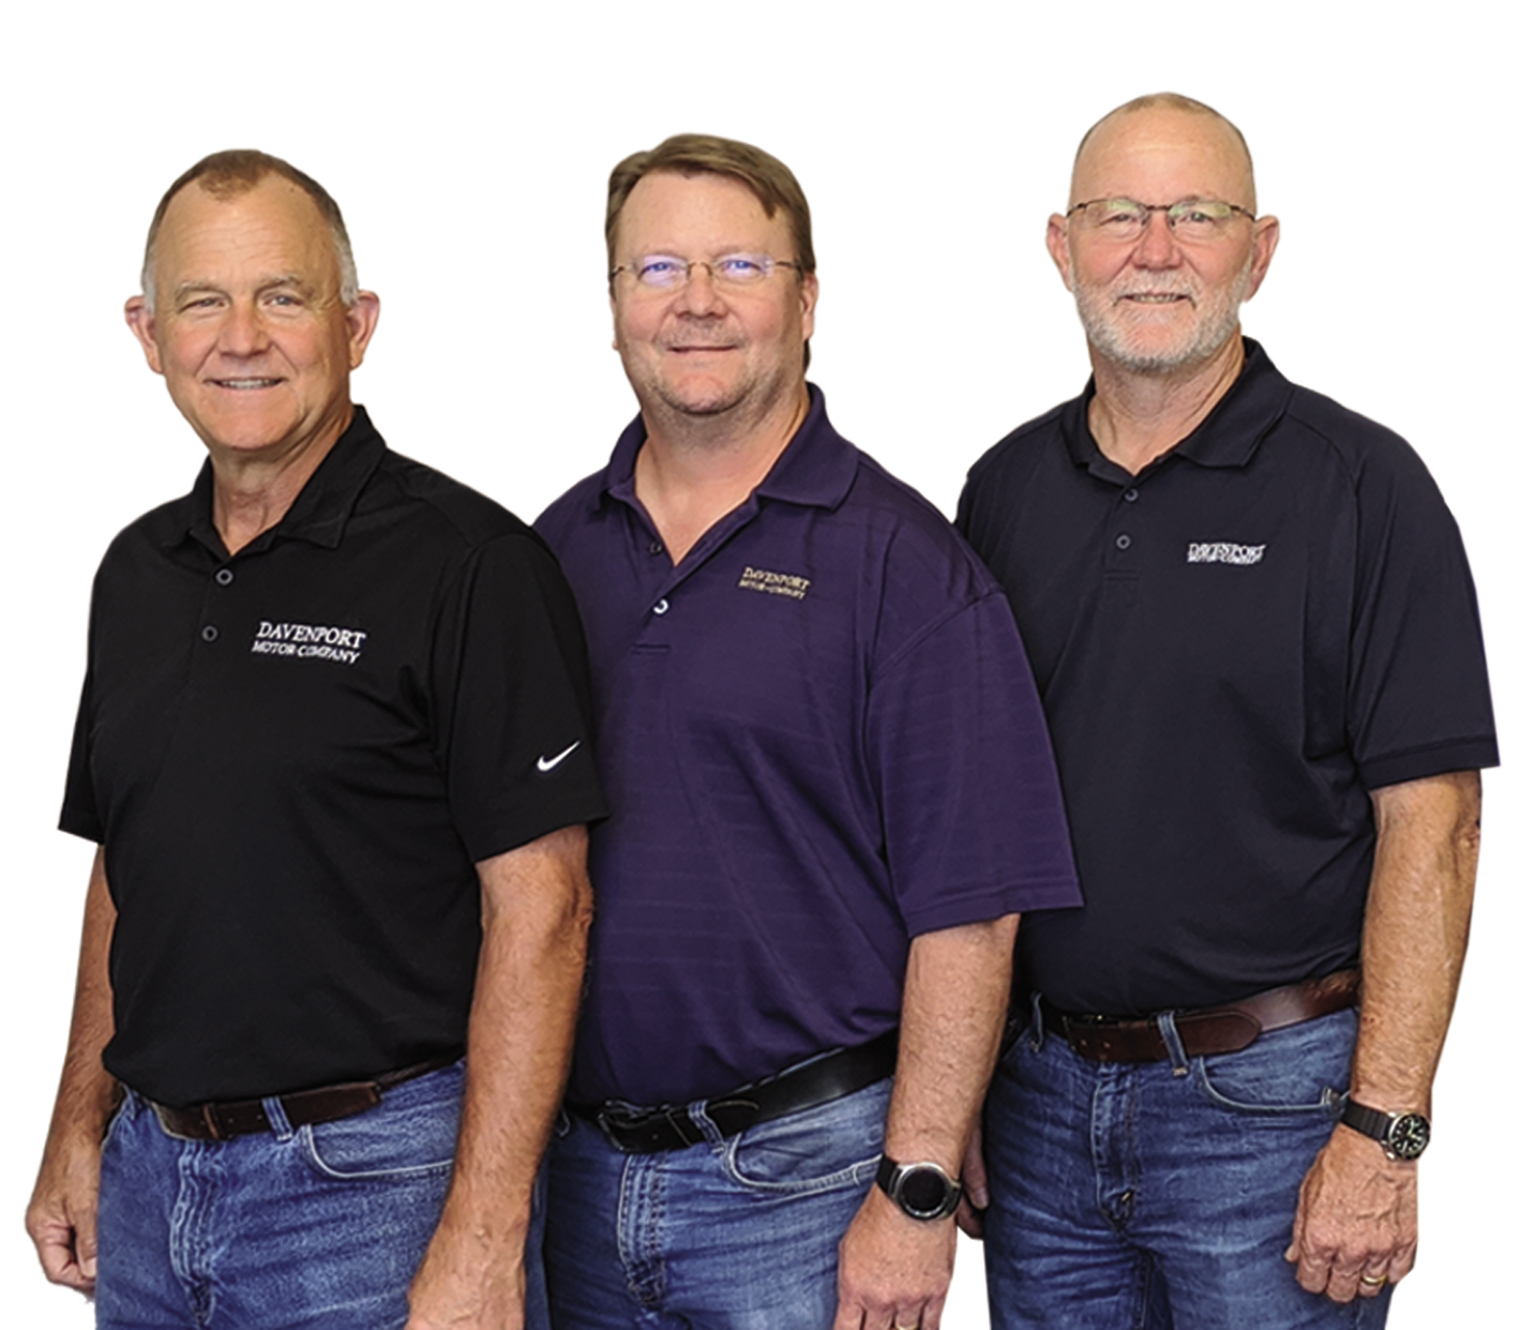 Auto Repair Team | Davenport Motor Company